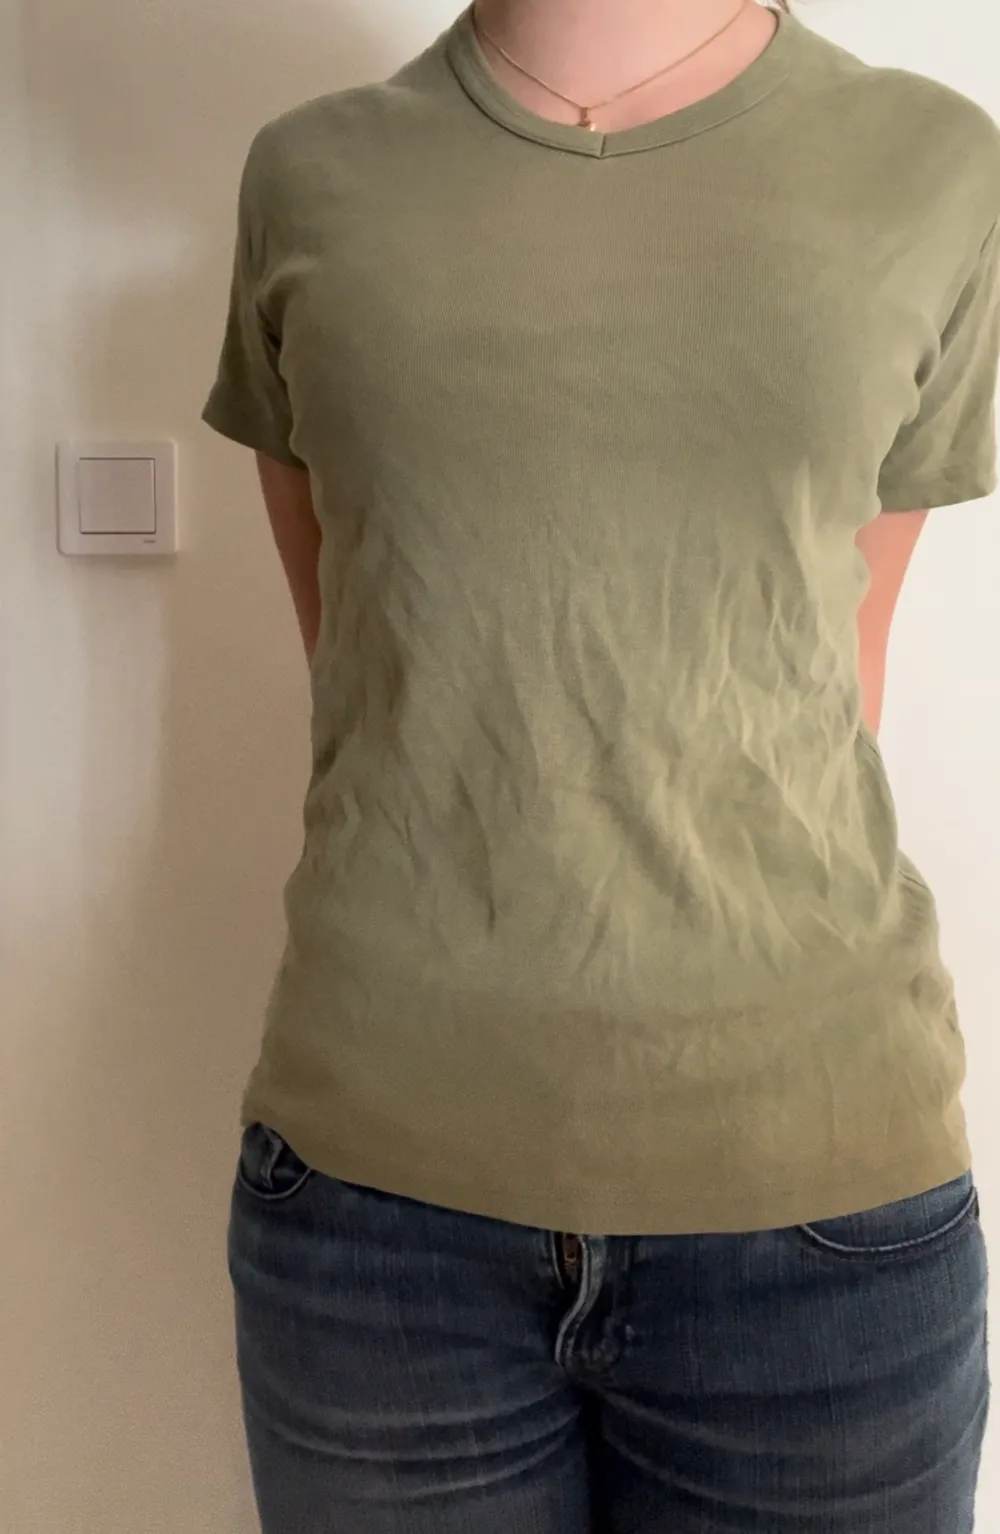 Mossgrön T-shirt utan defekter. Inte mycket använd. . T-shirts.